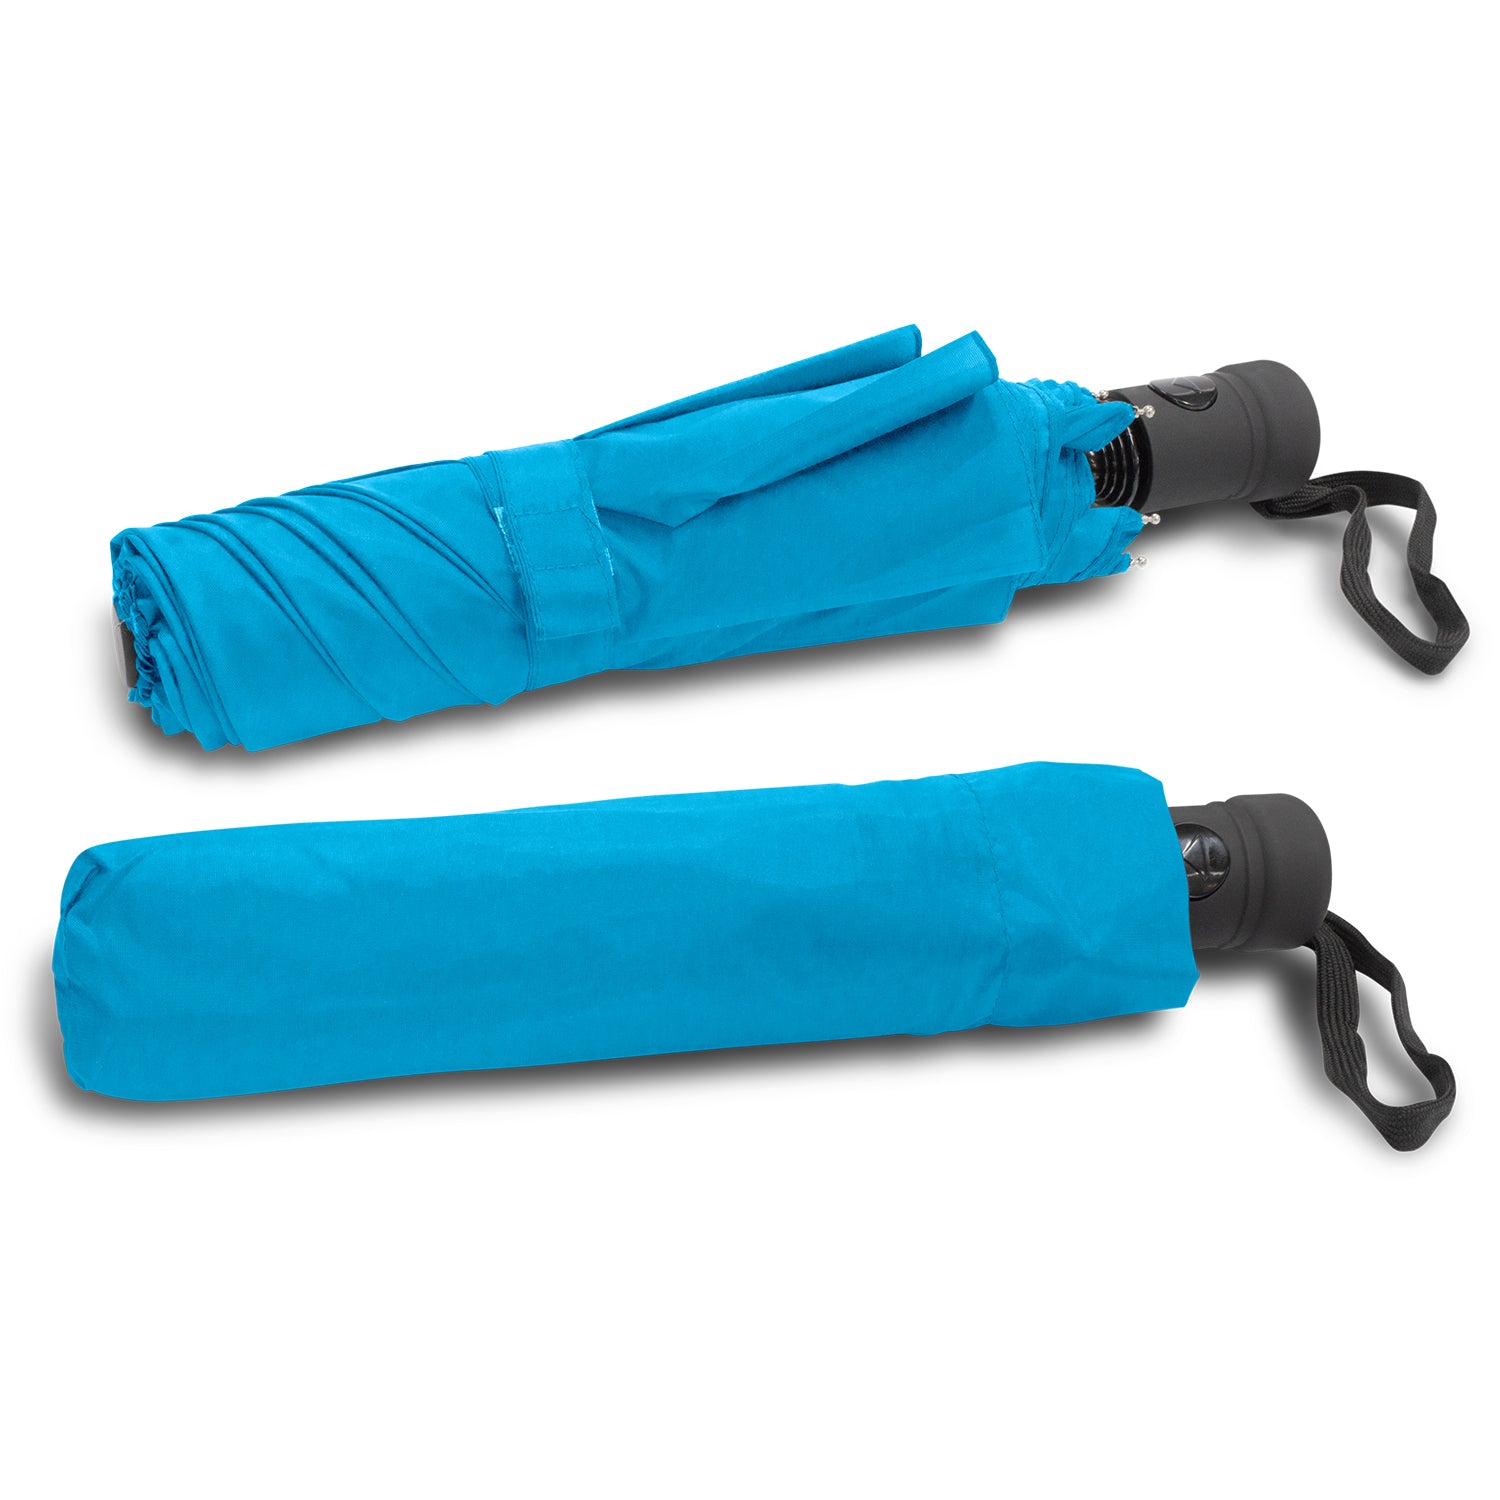 PEROS-TRI-FOLD-COMPACT-Umbrella-Compact-Travel-Umbrella-collapsible-steel-shaft-sky-blue-2